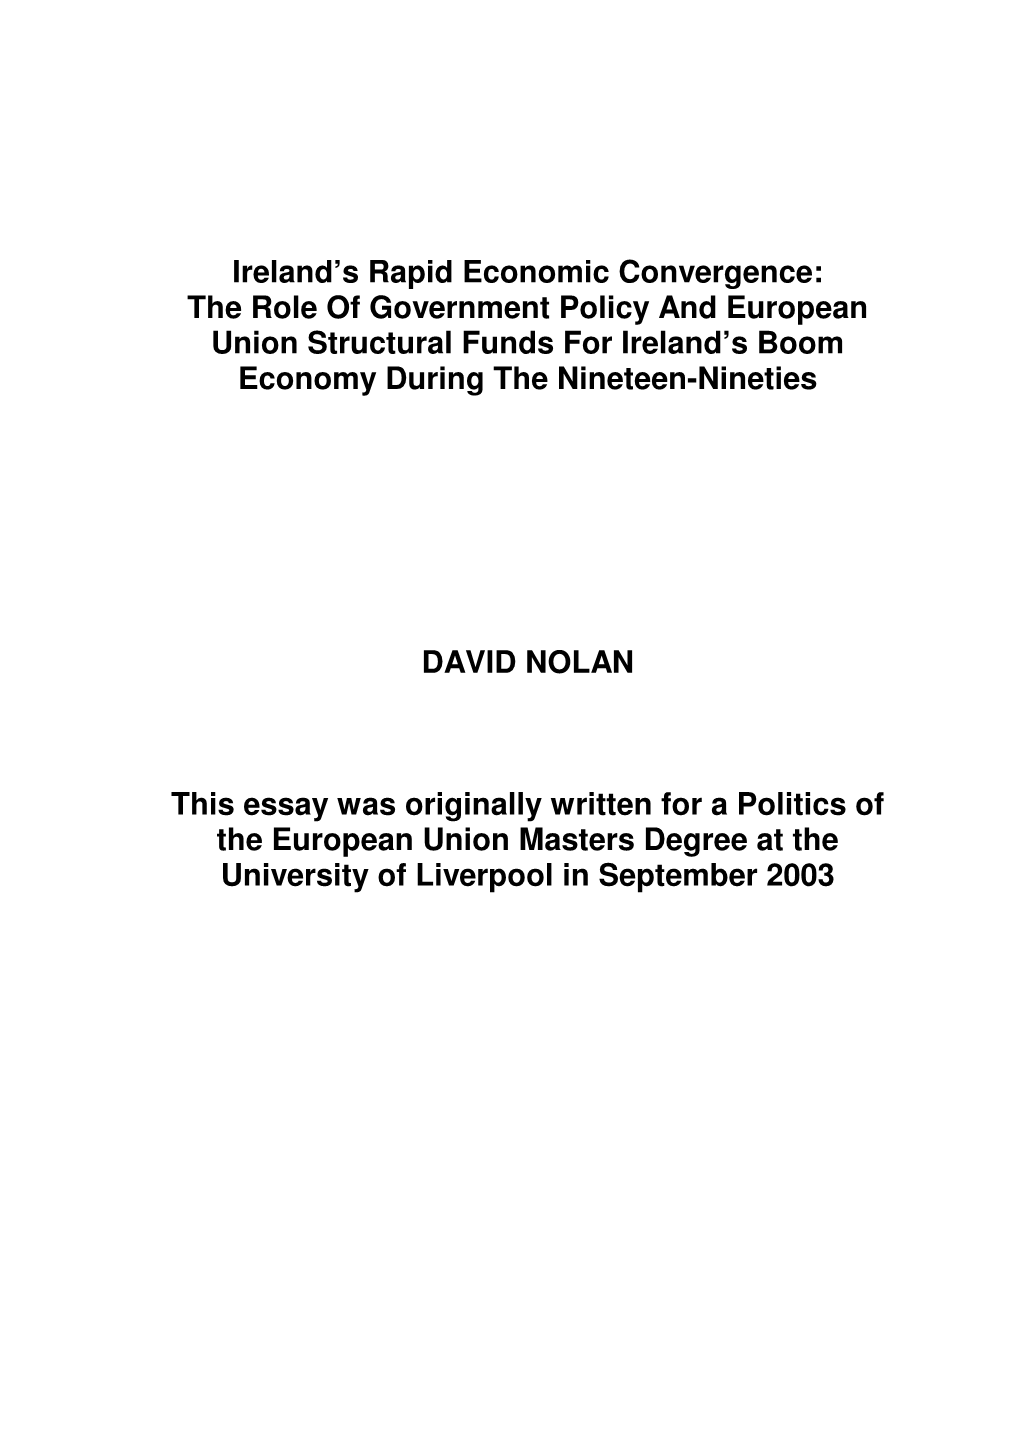 Ireland's Rapid Economic Convergence: the Role Of